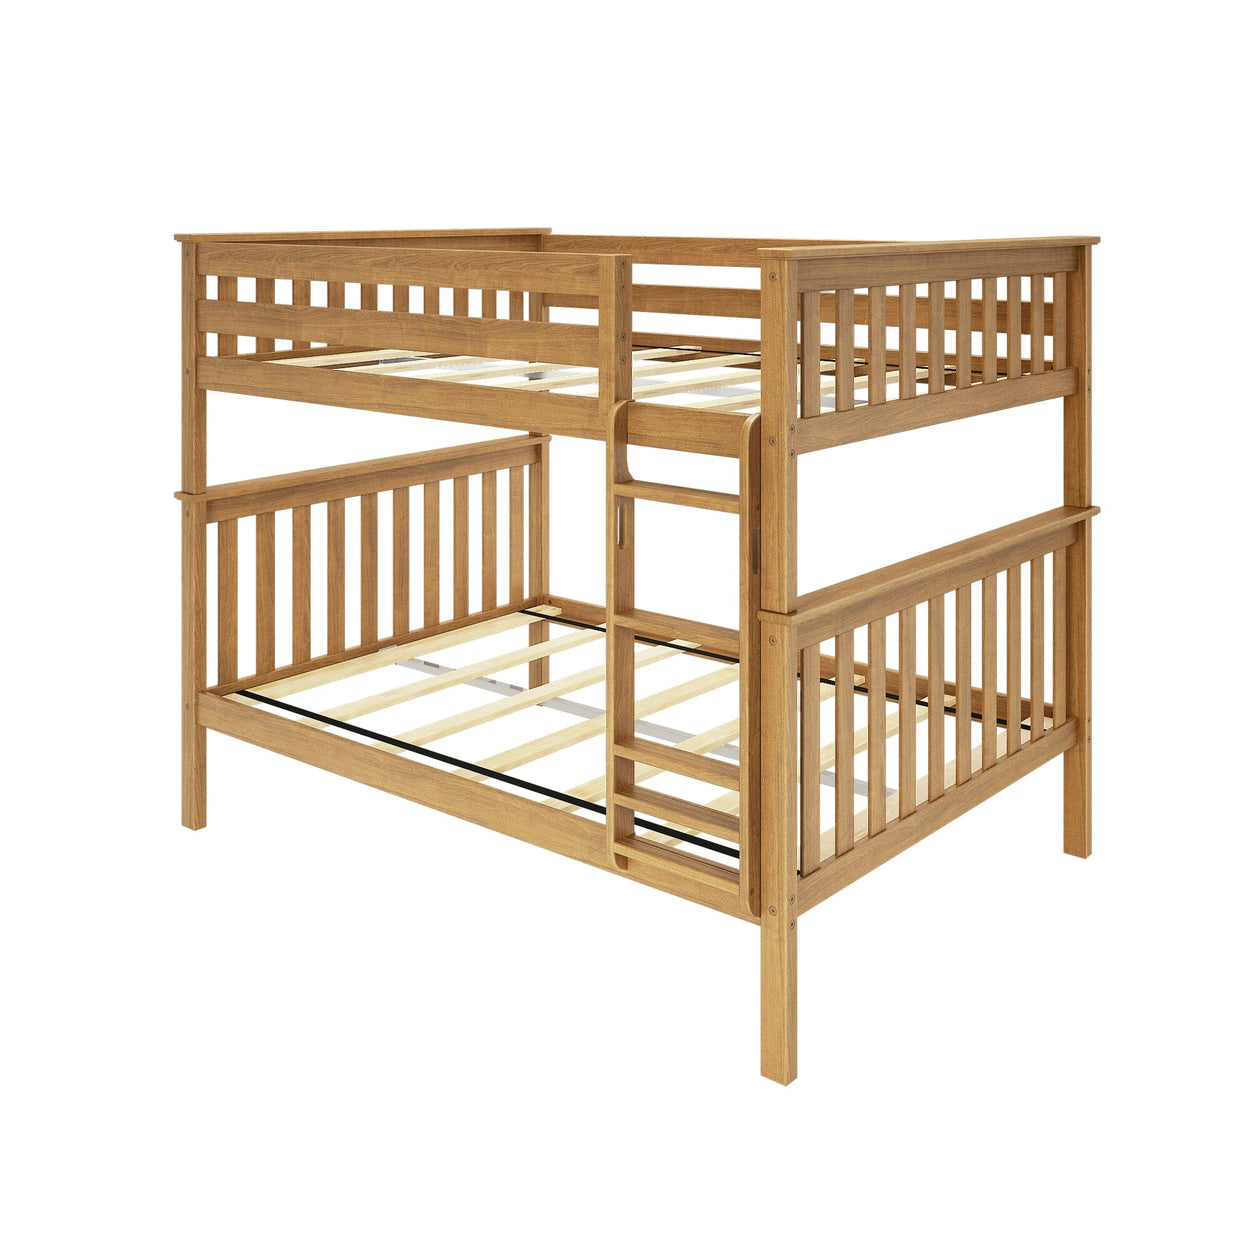 180251-007 : Bunk Beds Full over Full Bunk Bed, Pecan